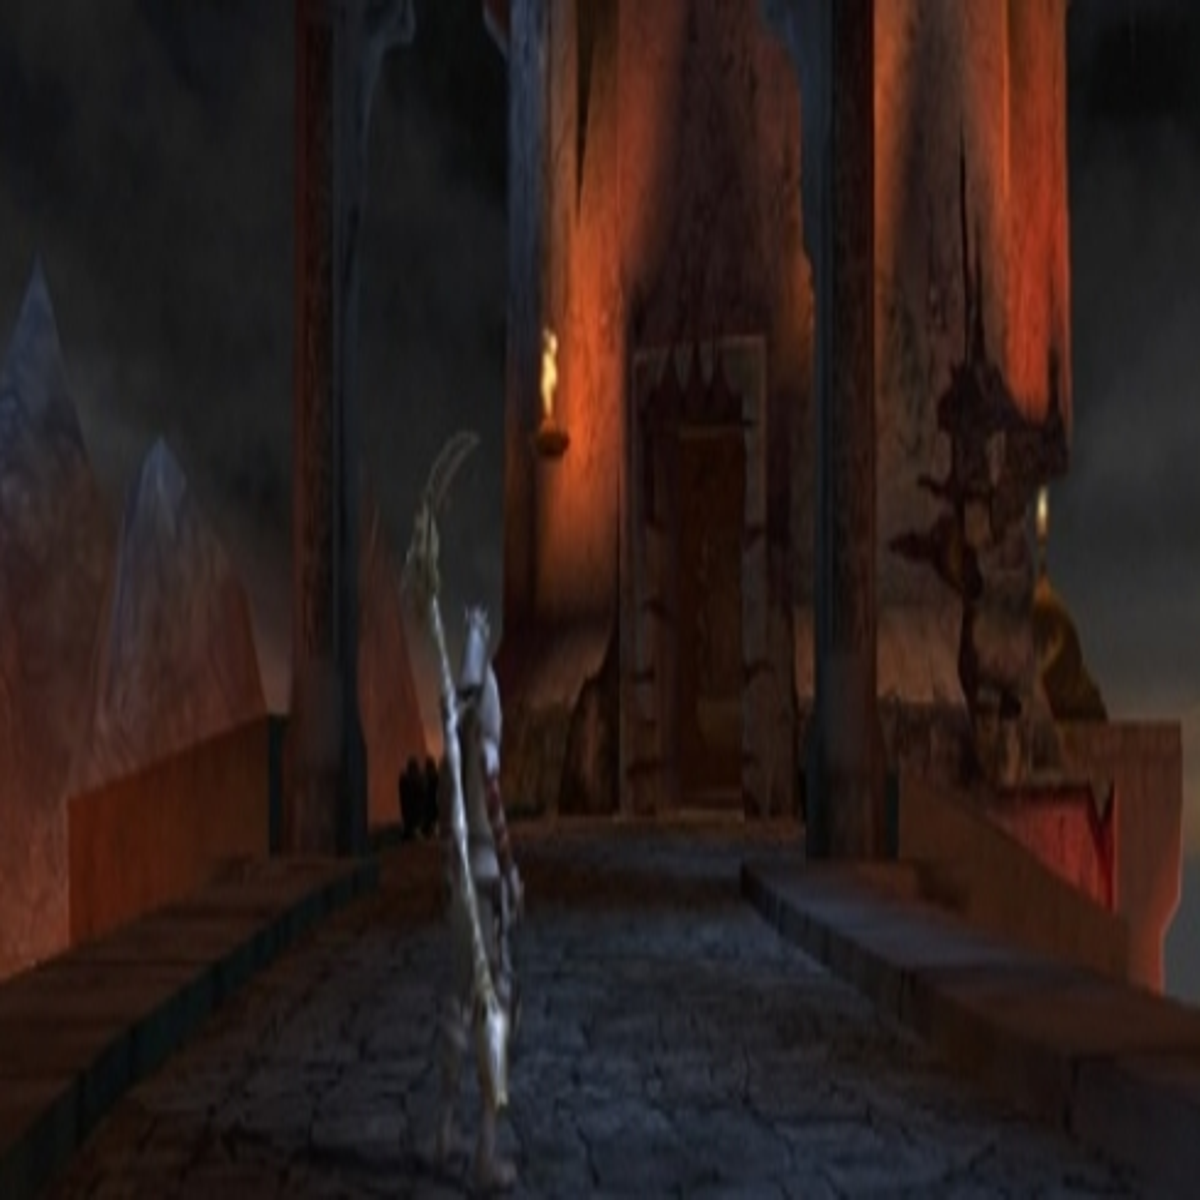 Sony PSP Dante's Inferno Video Games